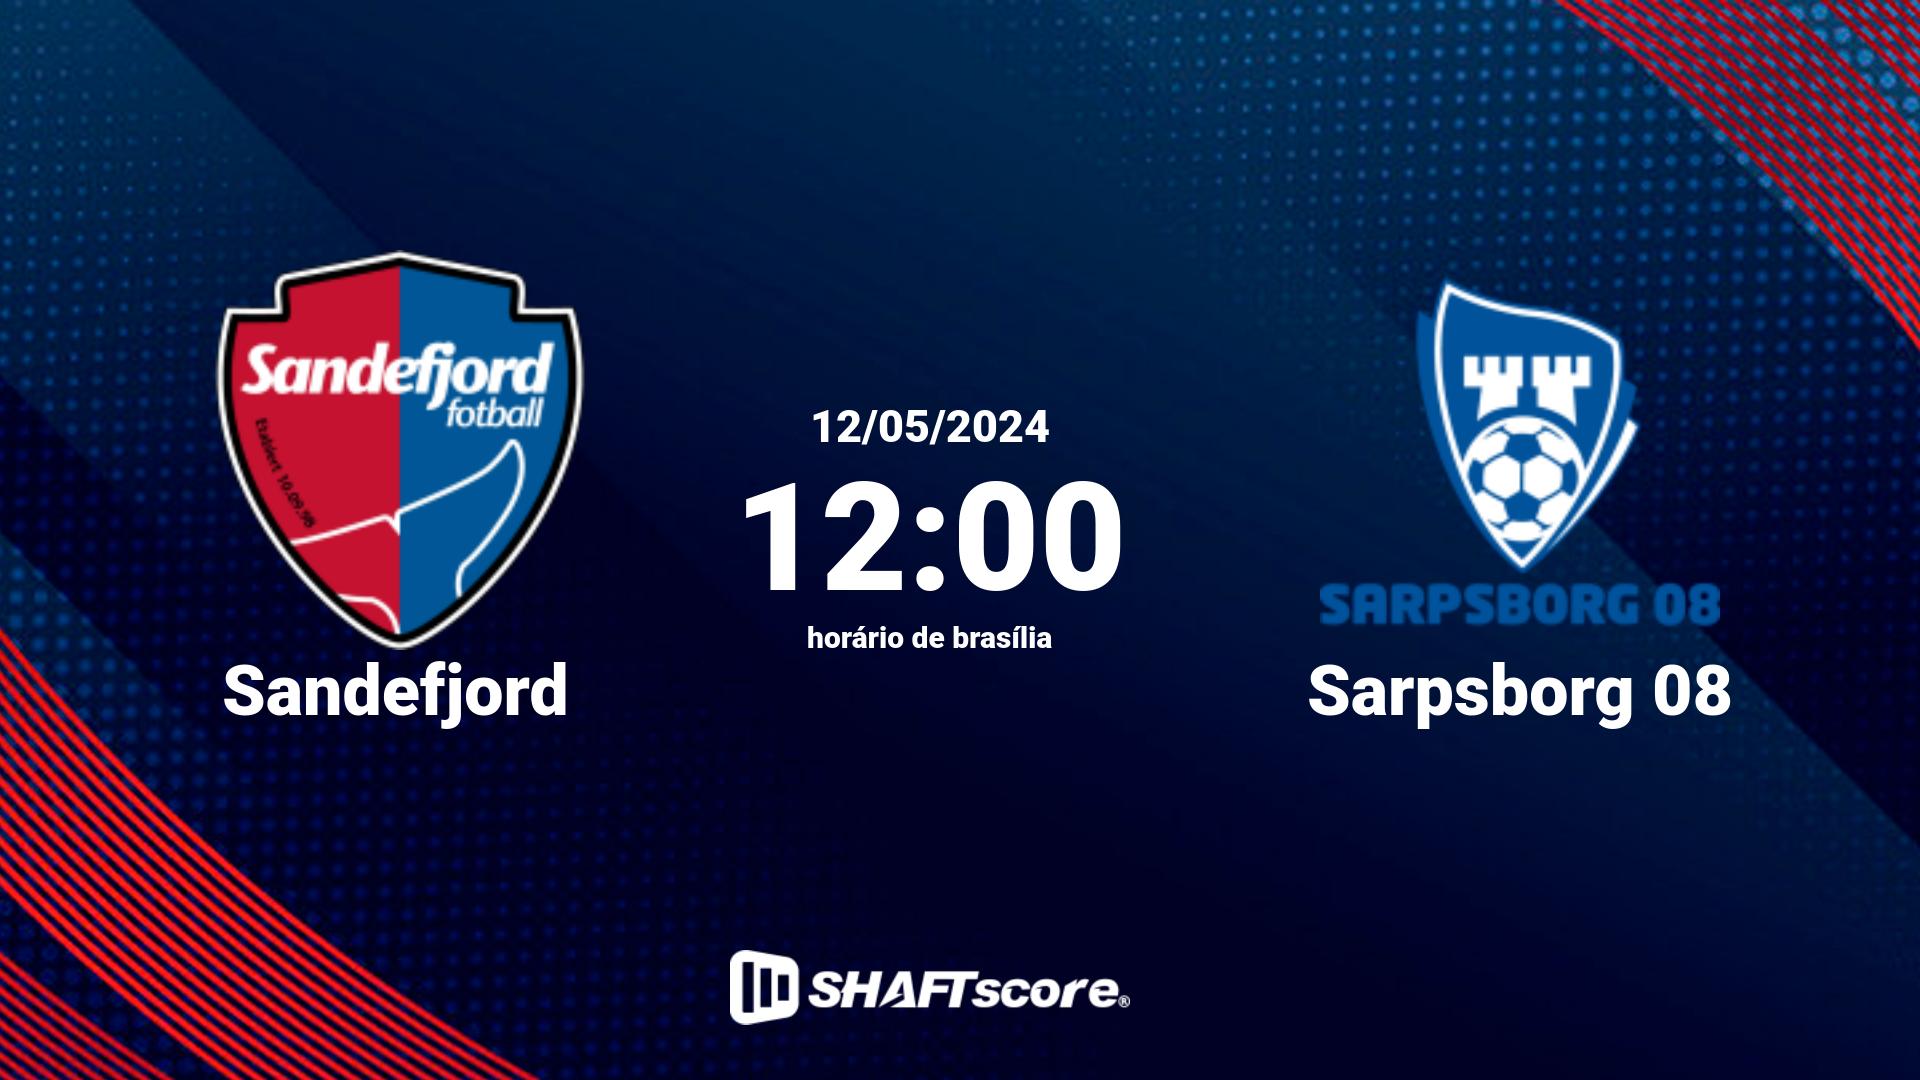 Estatísticas do jogo Sandefjord vs Sarpsborg 08 12.05 12:00